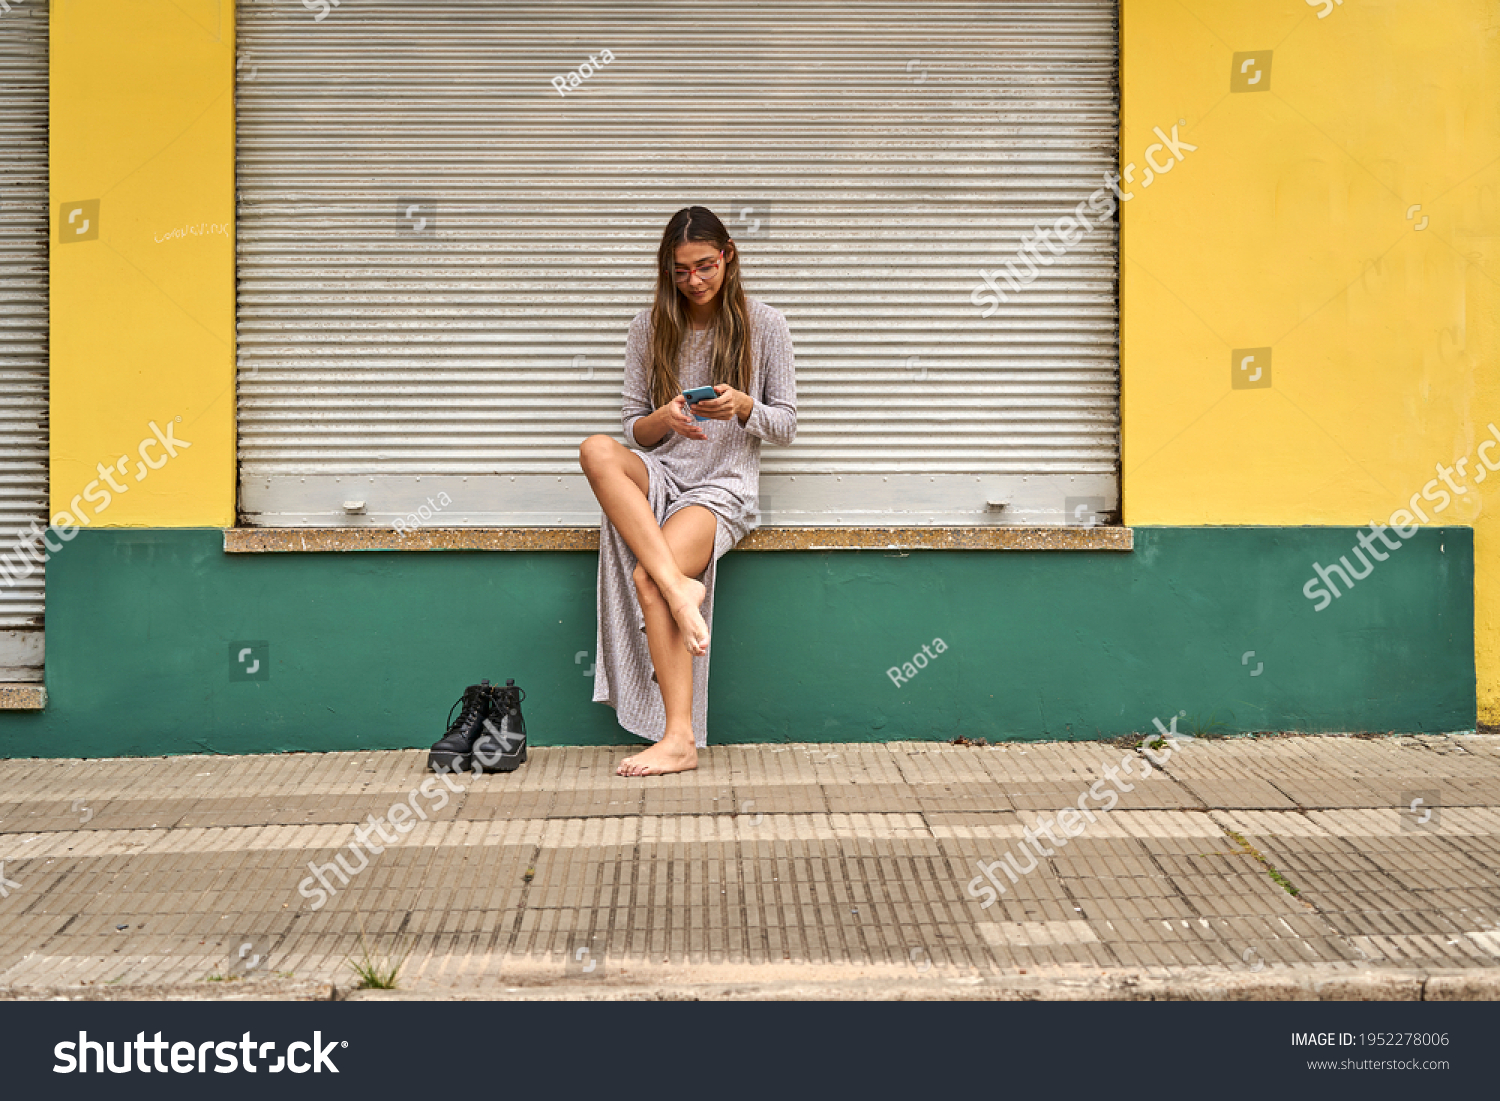 https://image.shutterstock.com/shutterstock/photos/1952278006/display_1500/stock-photo-latin-woman-using-mobile-phone-1952278006.jpg